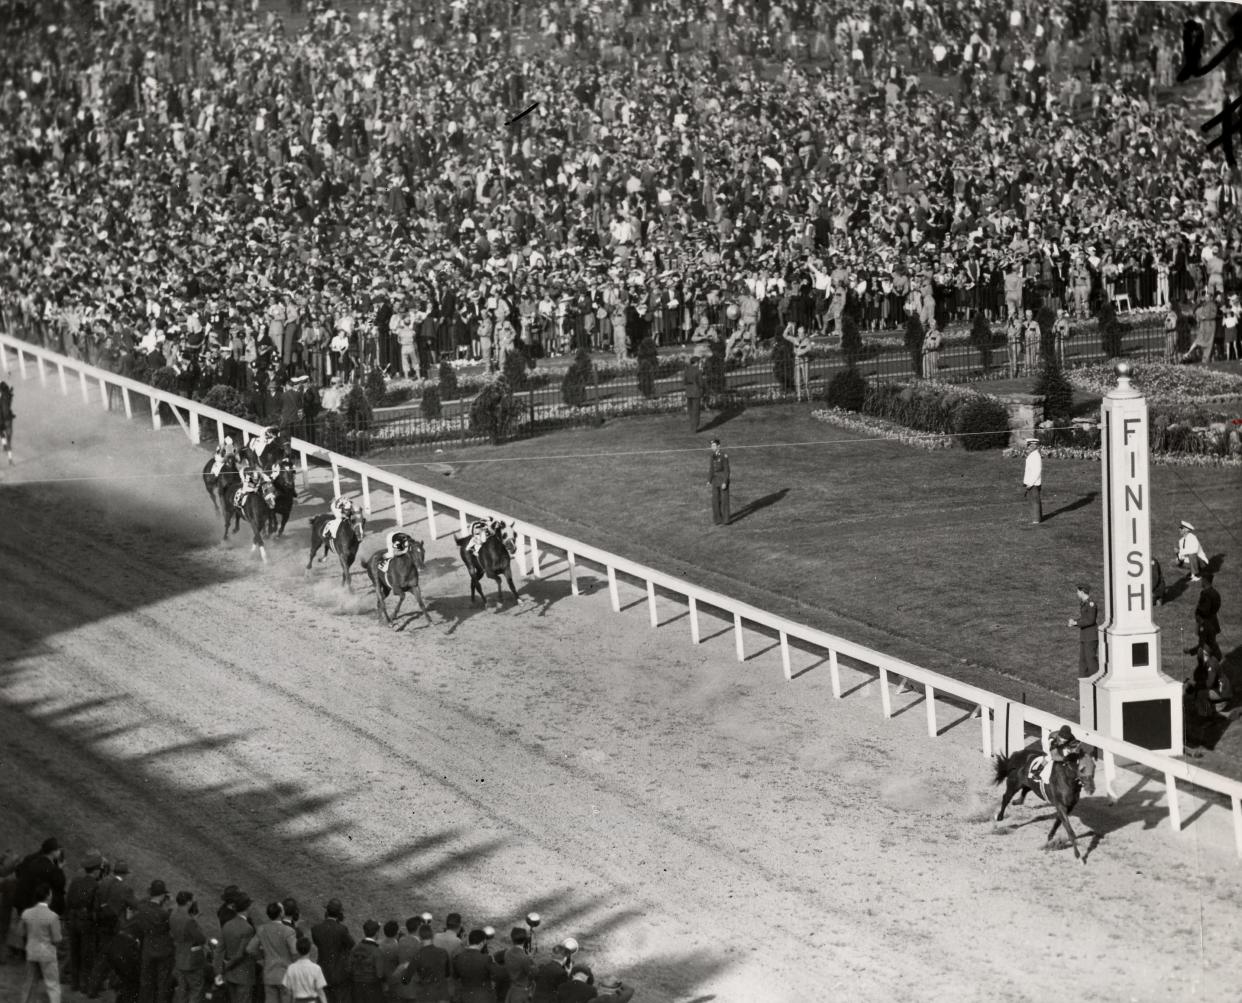 Whirlaway wins the 1941 Kentucky Derby.